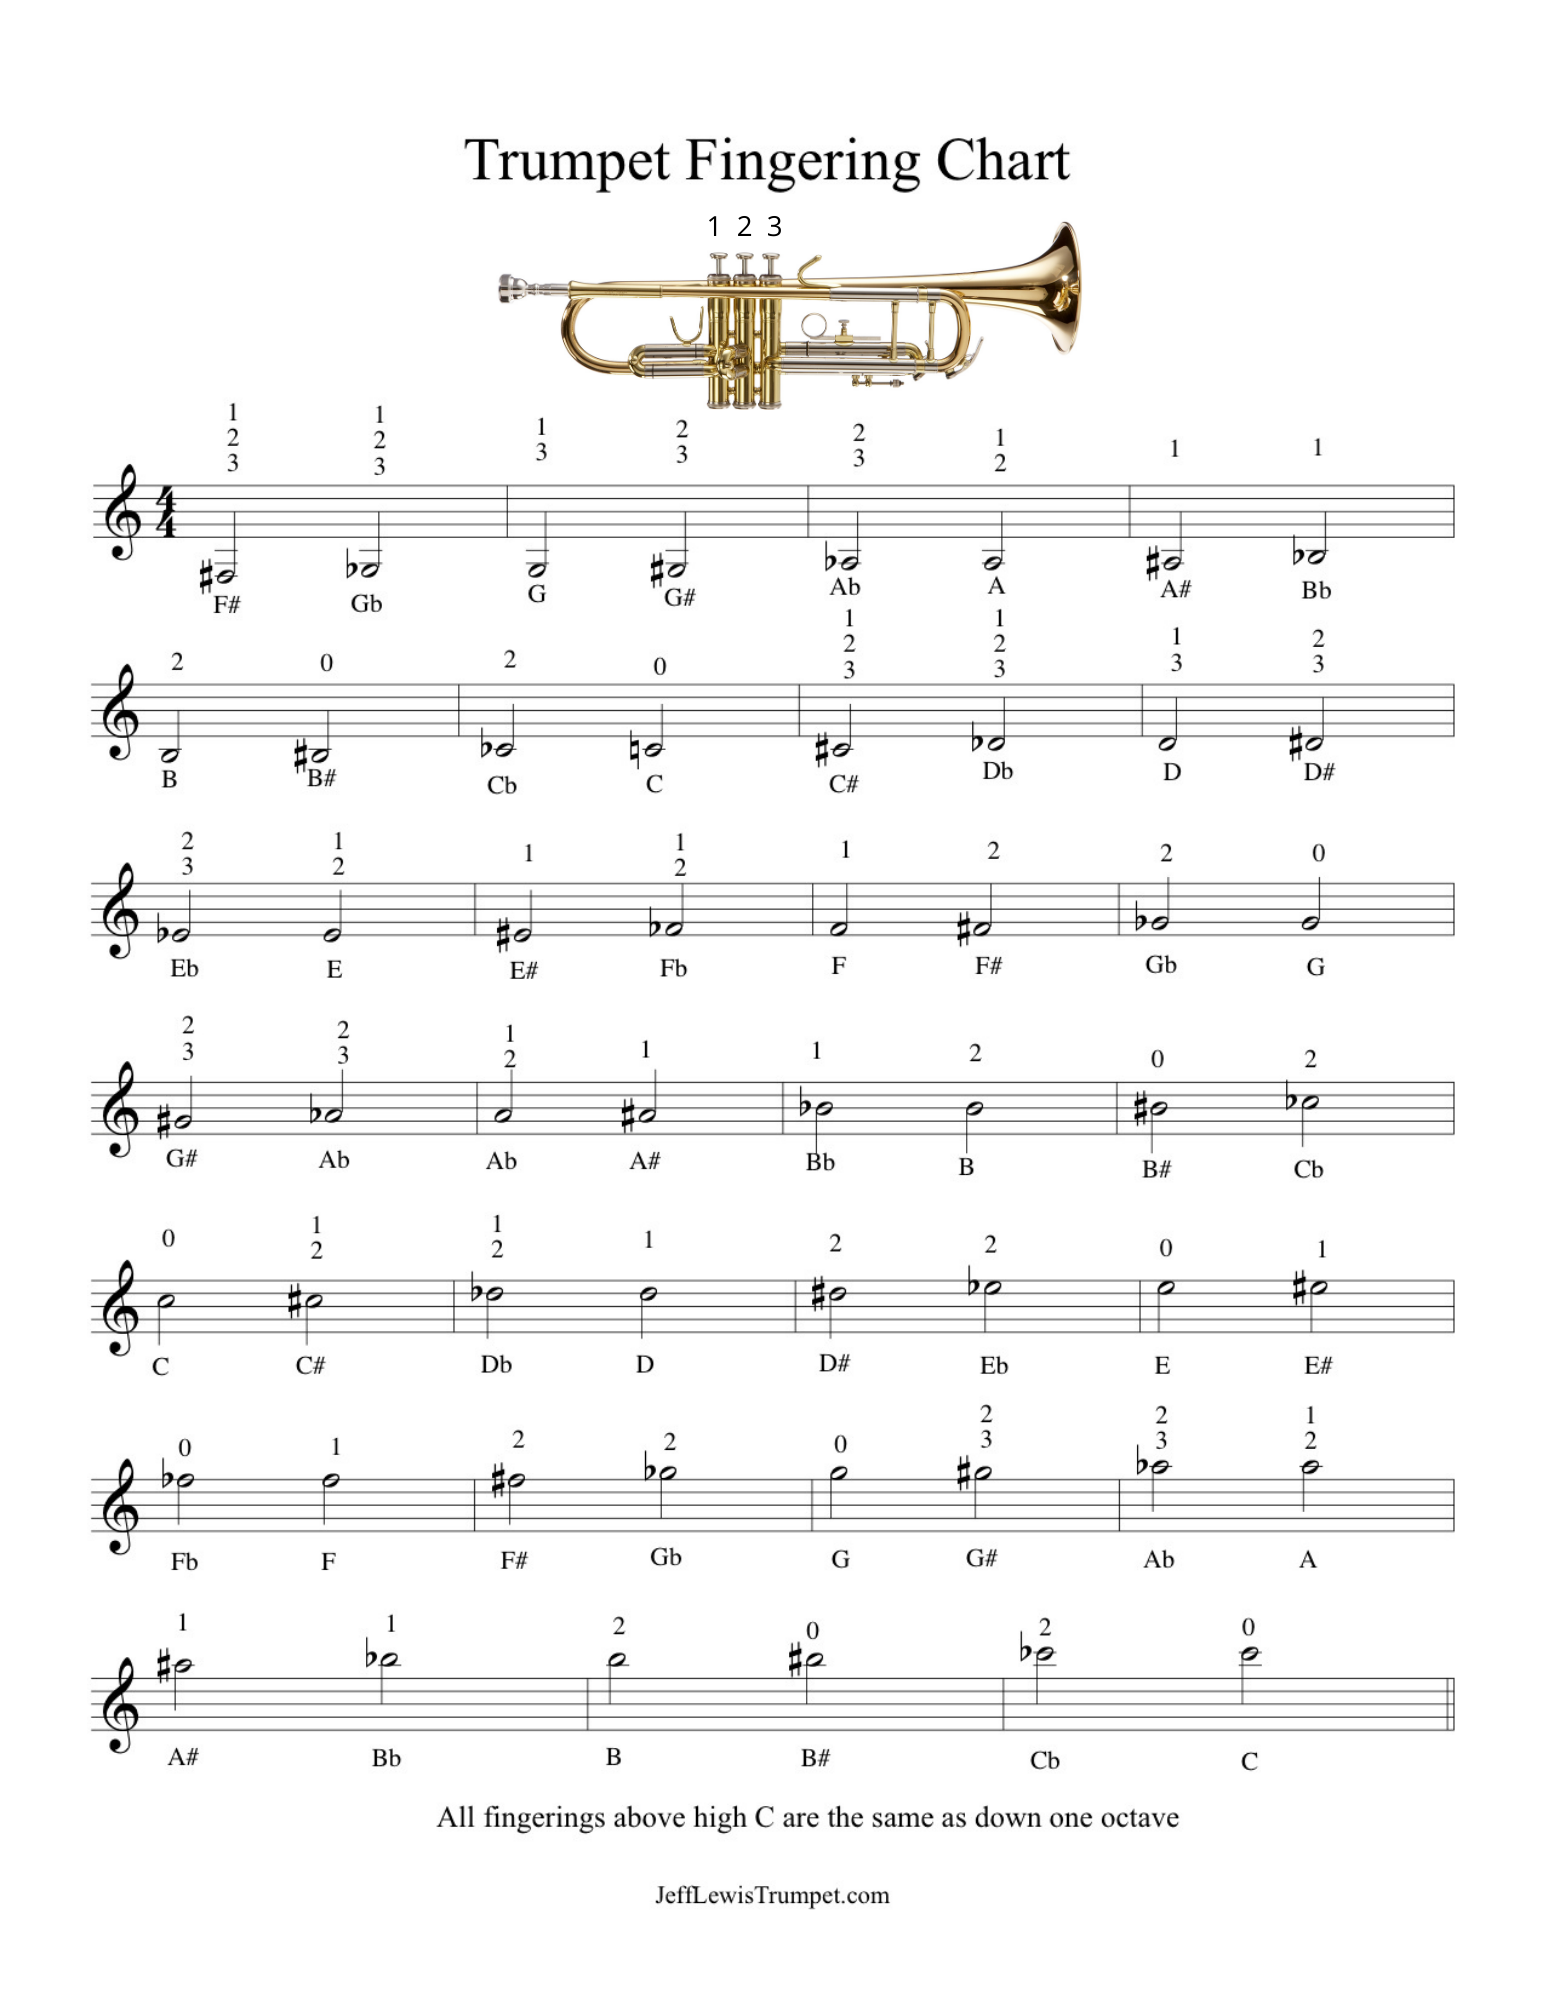 Trumpet Fingering Chart | Jeff Lewis Trumpet